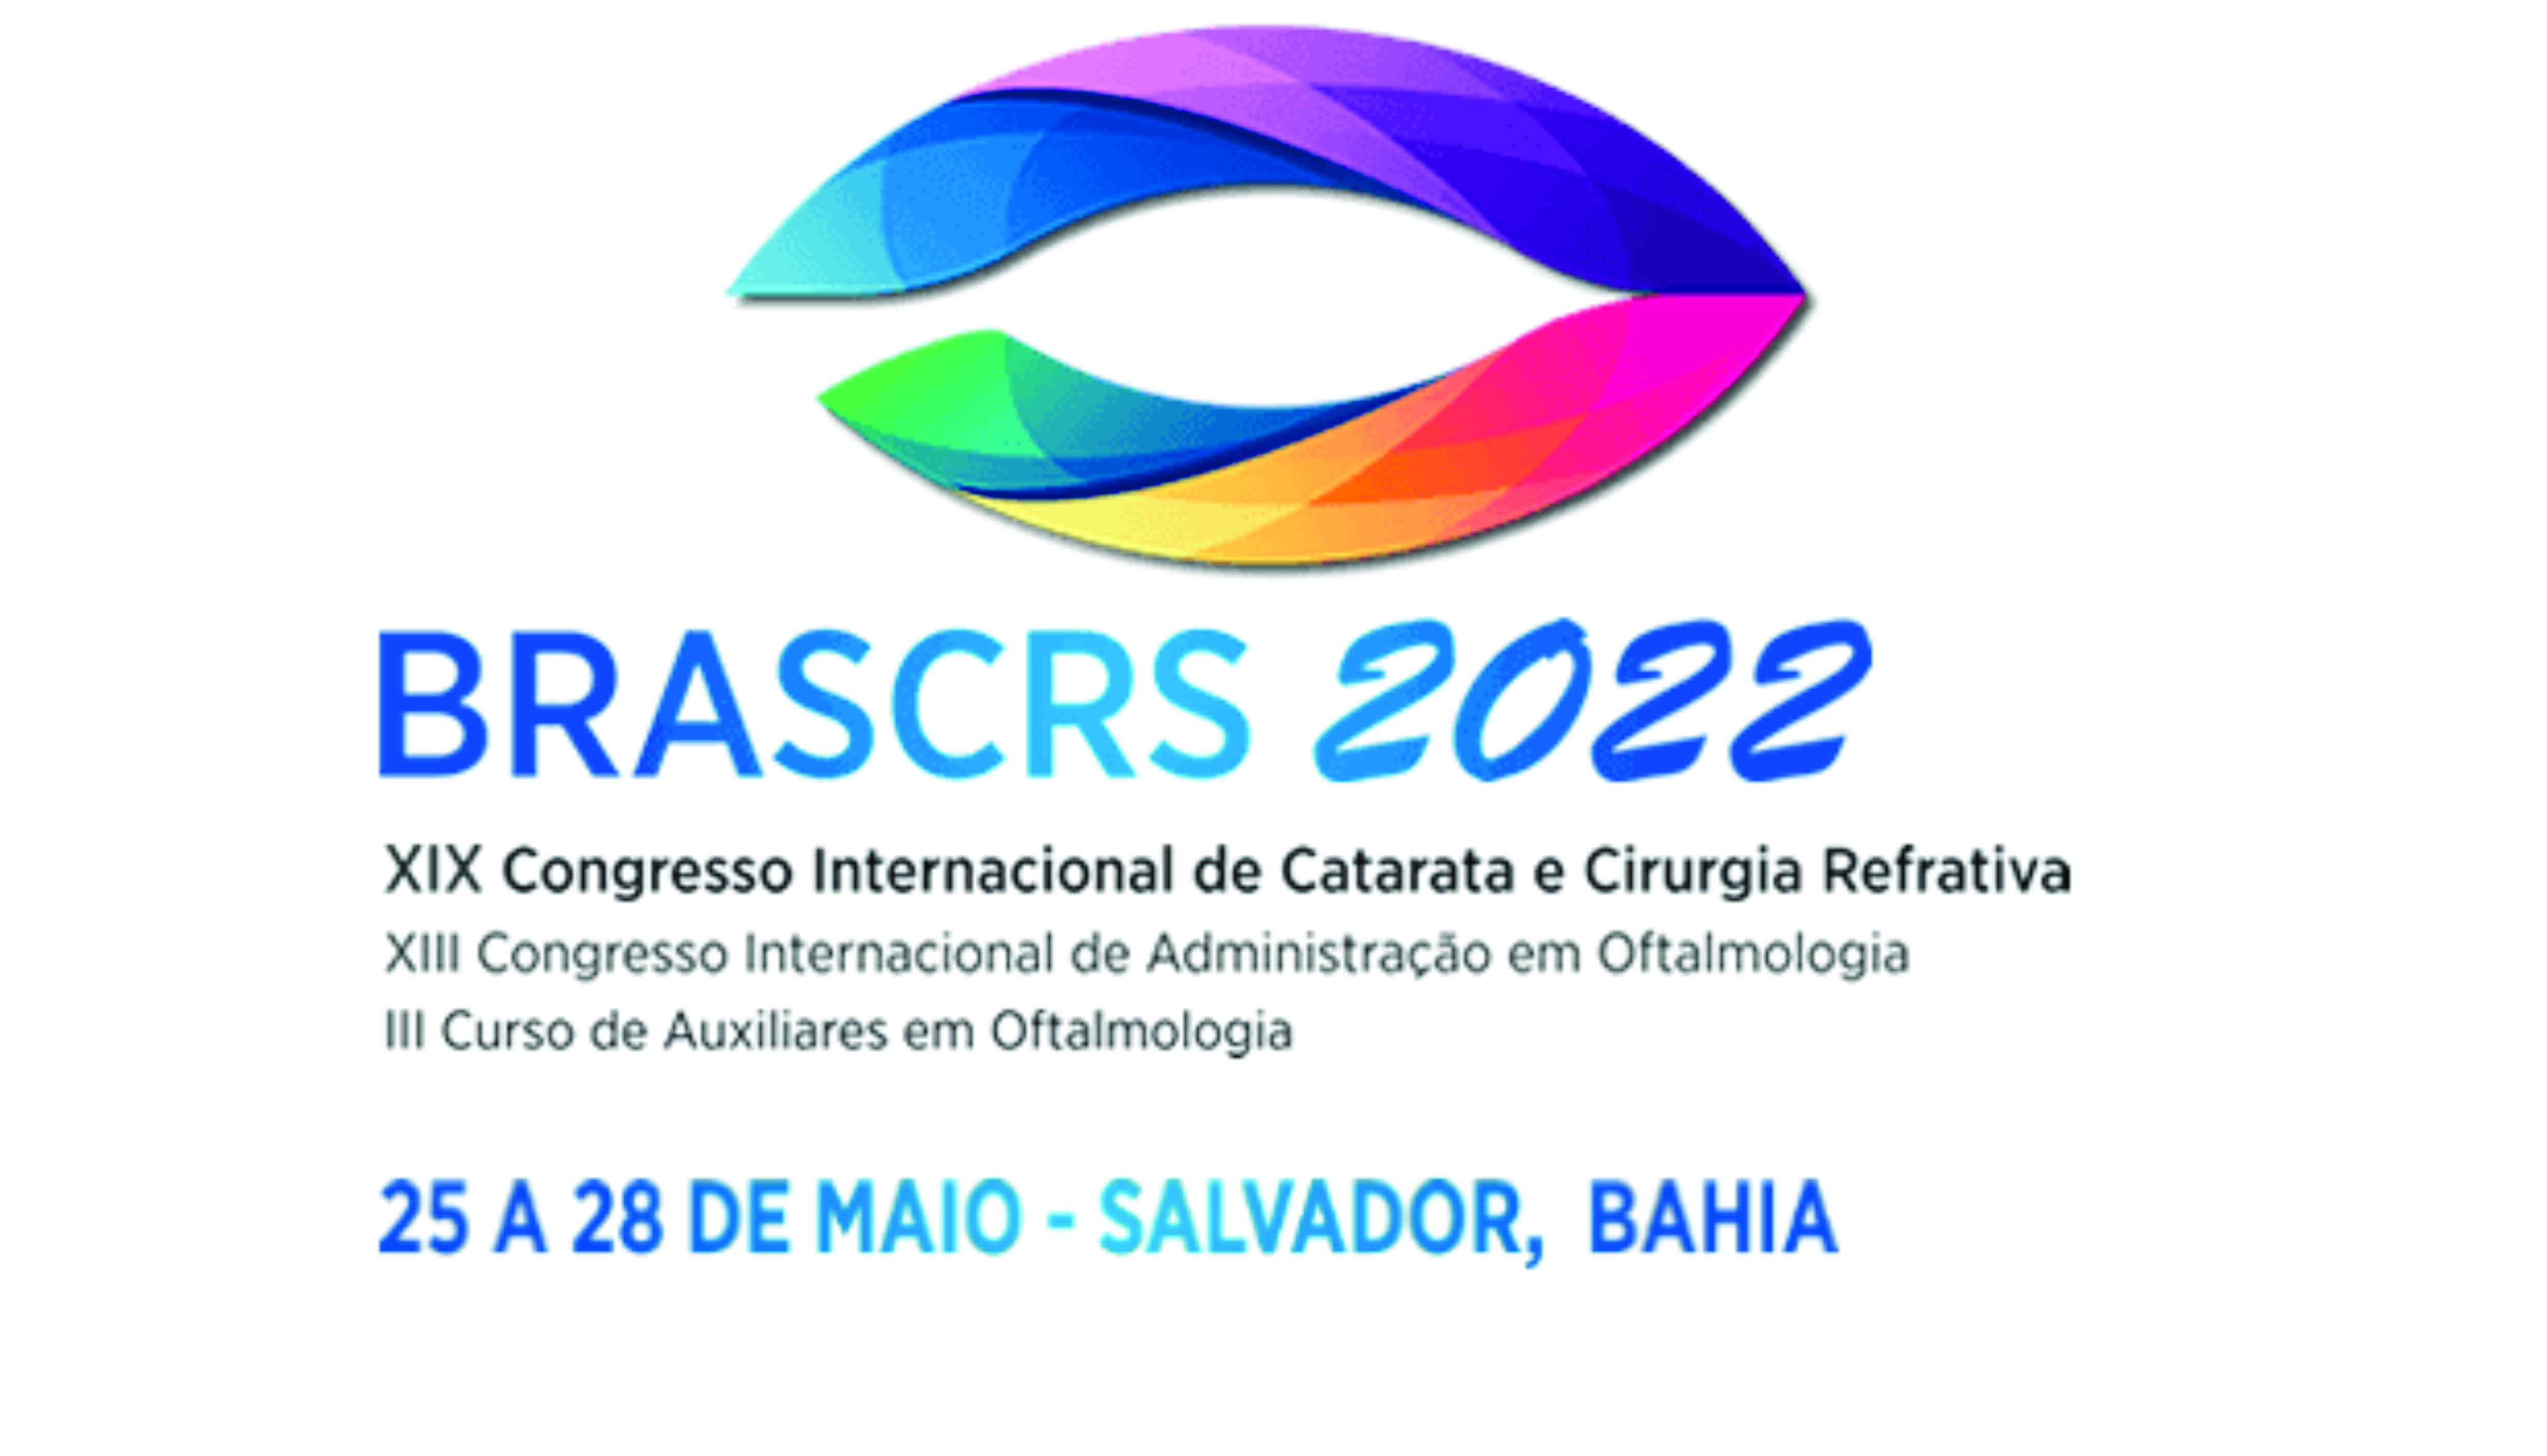 BRASCRS 2022 - XIX Congresso Internacional de Catarata e Cirurgia Refrativa